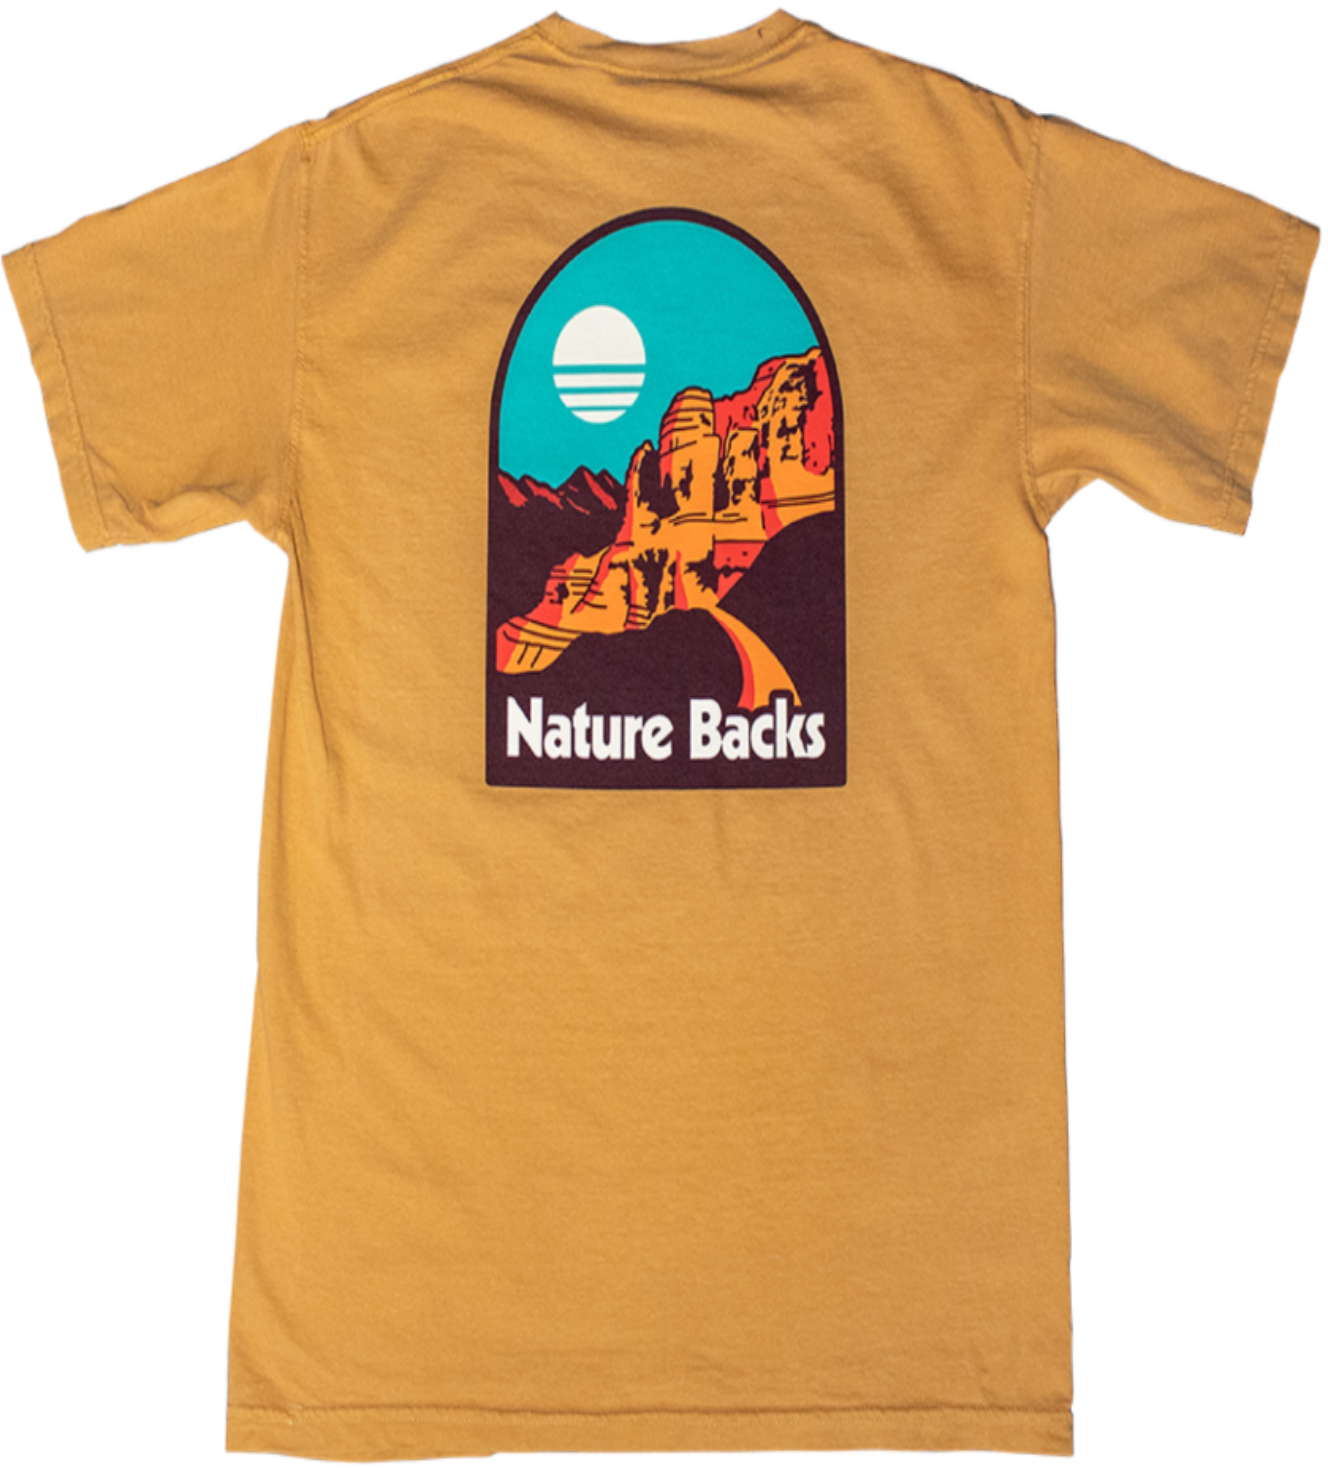 Nature Backs T-Shirts and